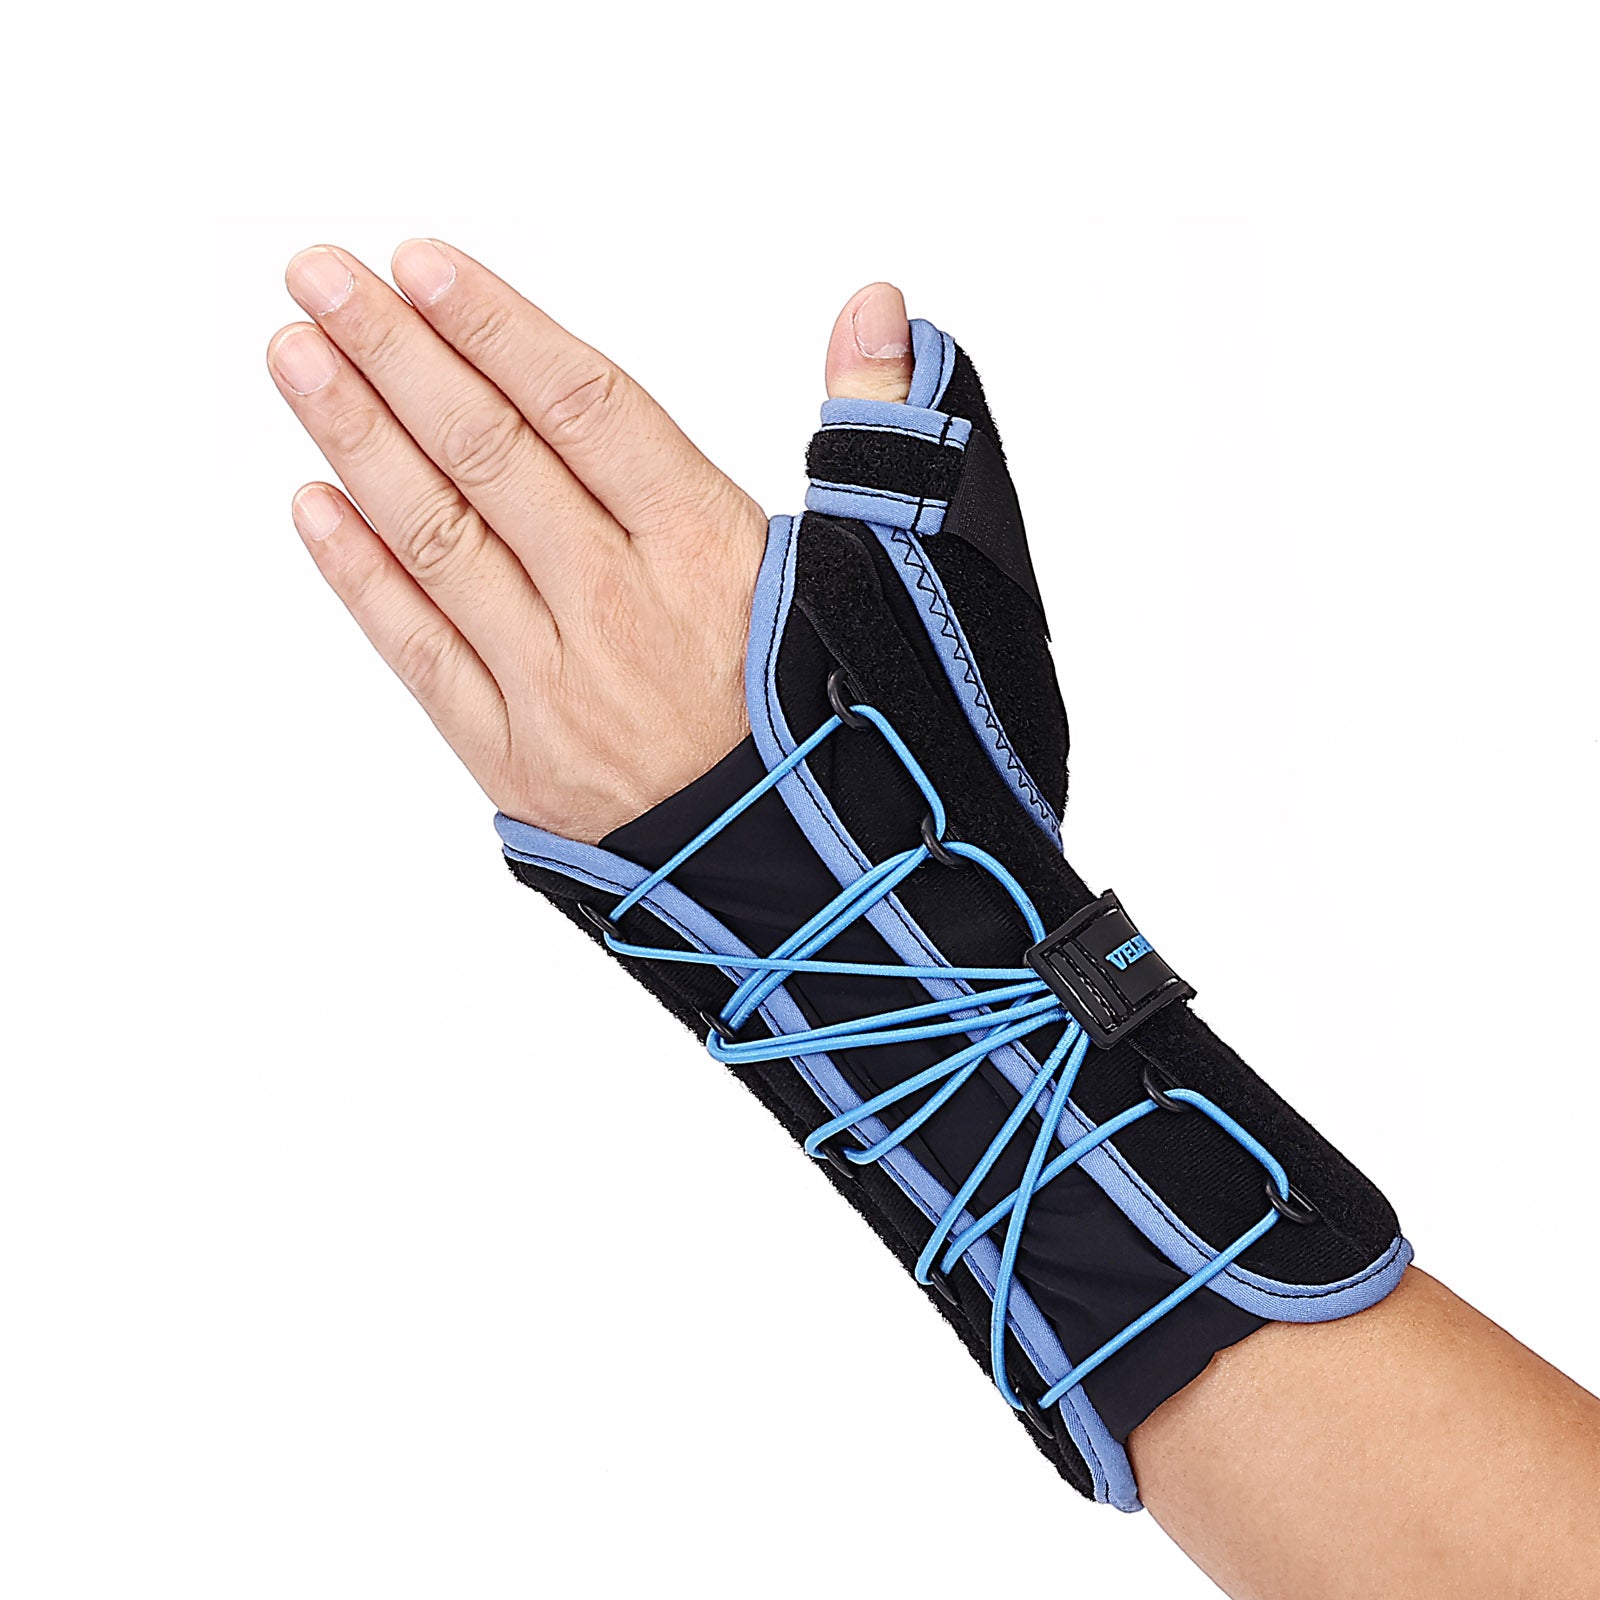 Velpeau Wrist Brace with Thumb Spica Splint Regular, Right Hand